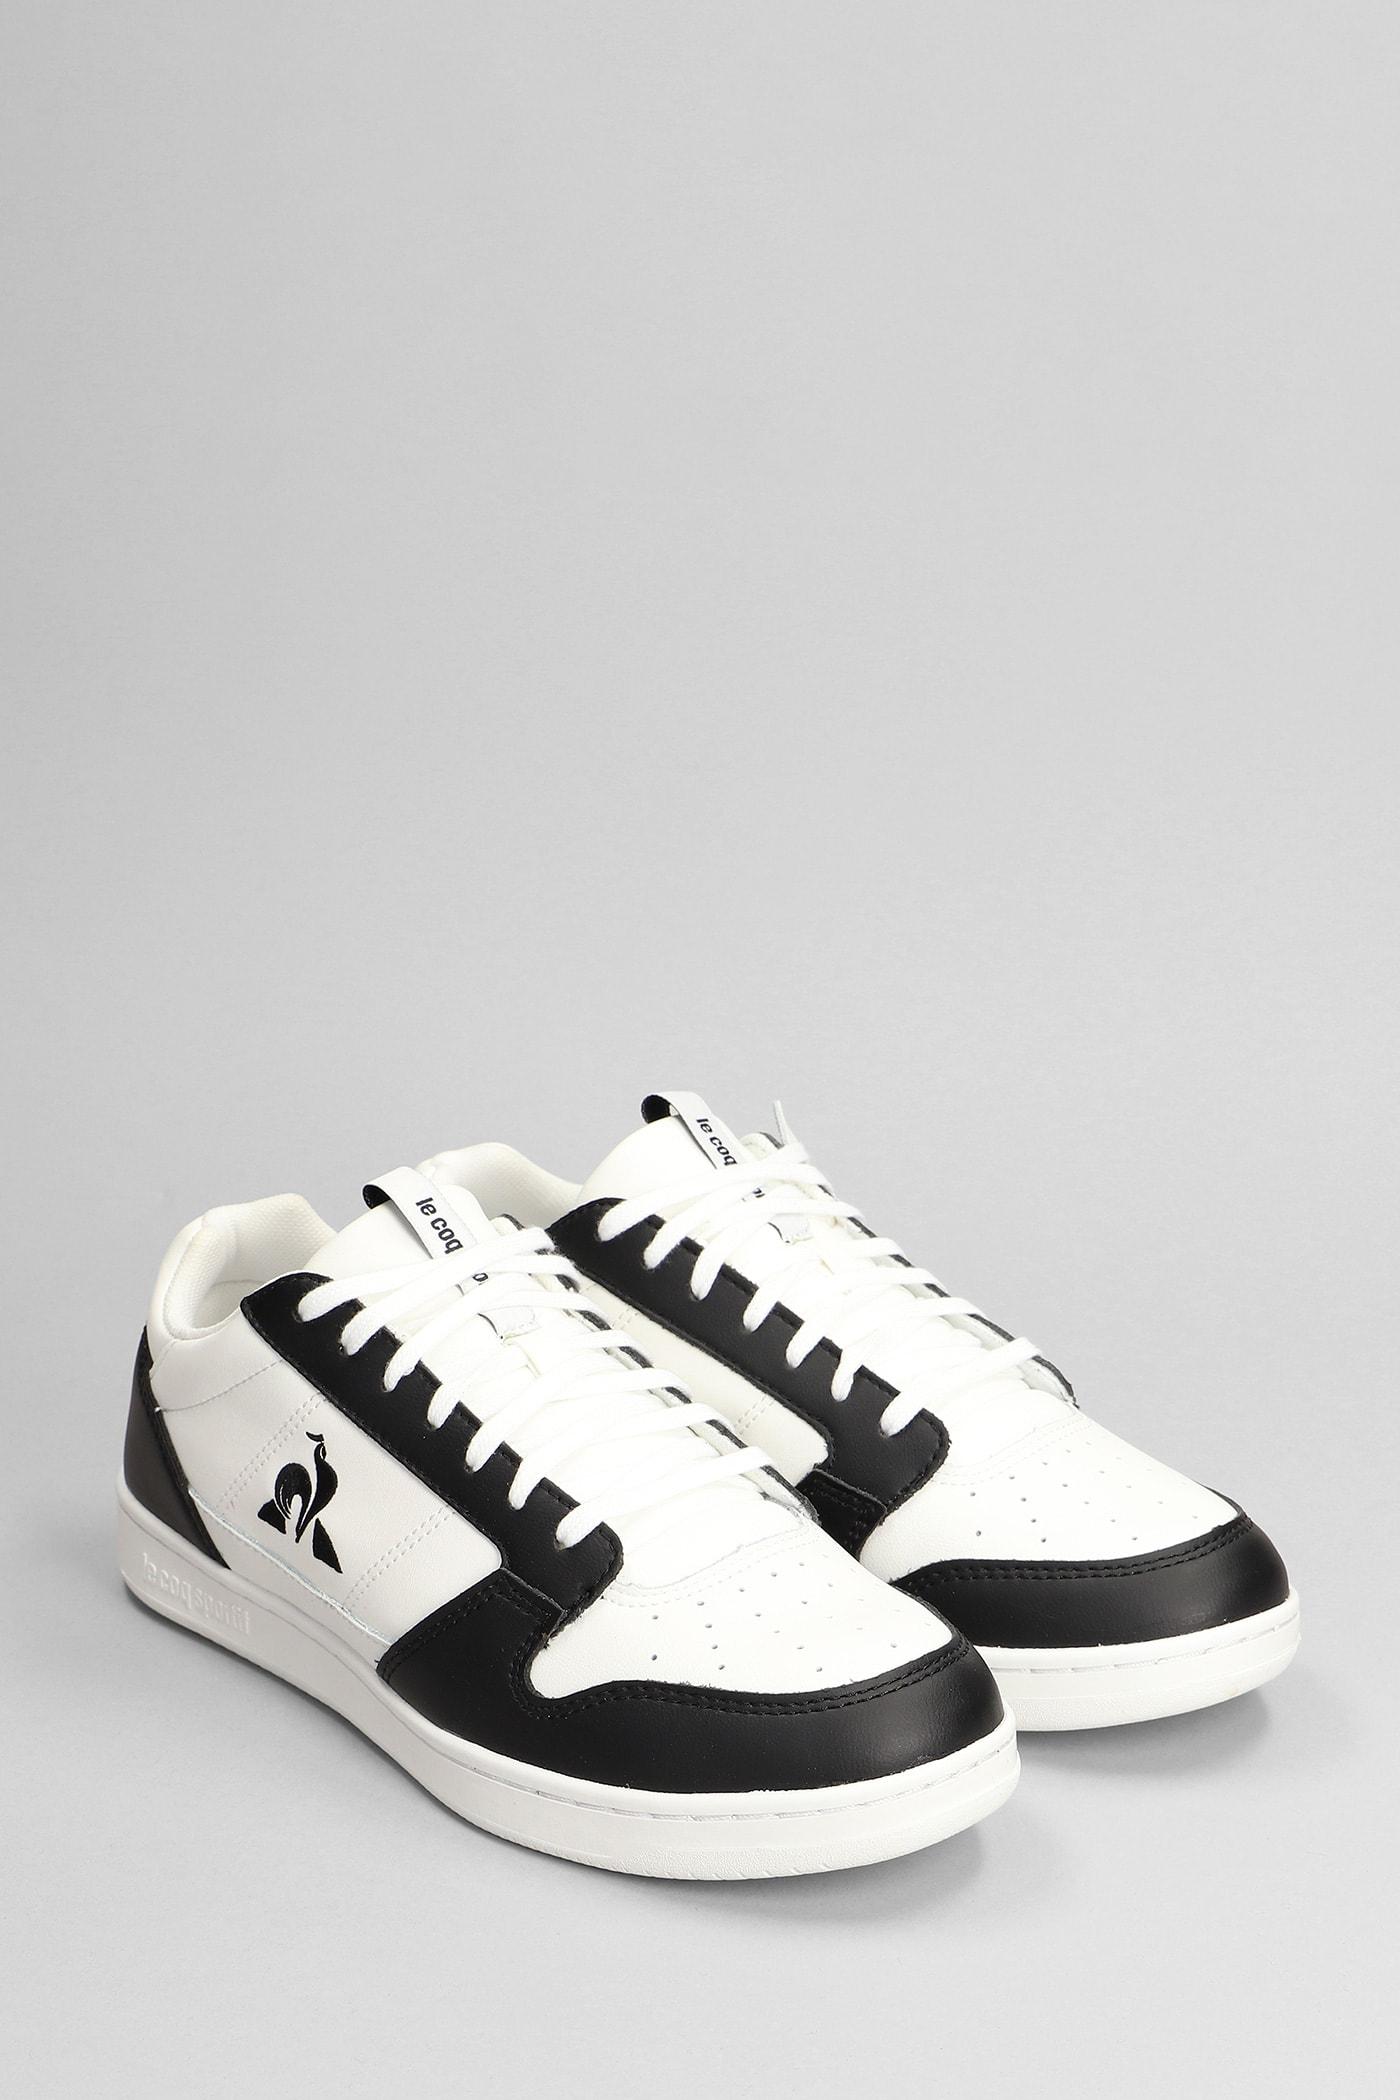 Le Coq Sportif Sport Sneakers In White Leather for Men | Lyst